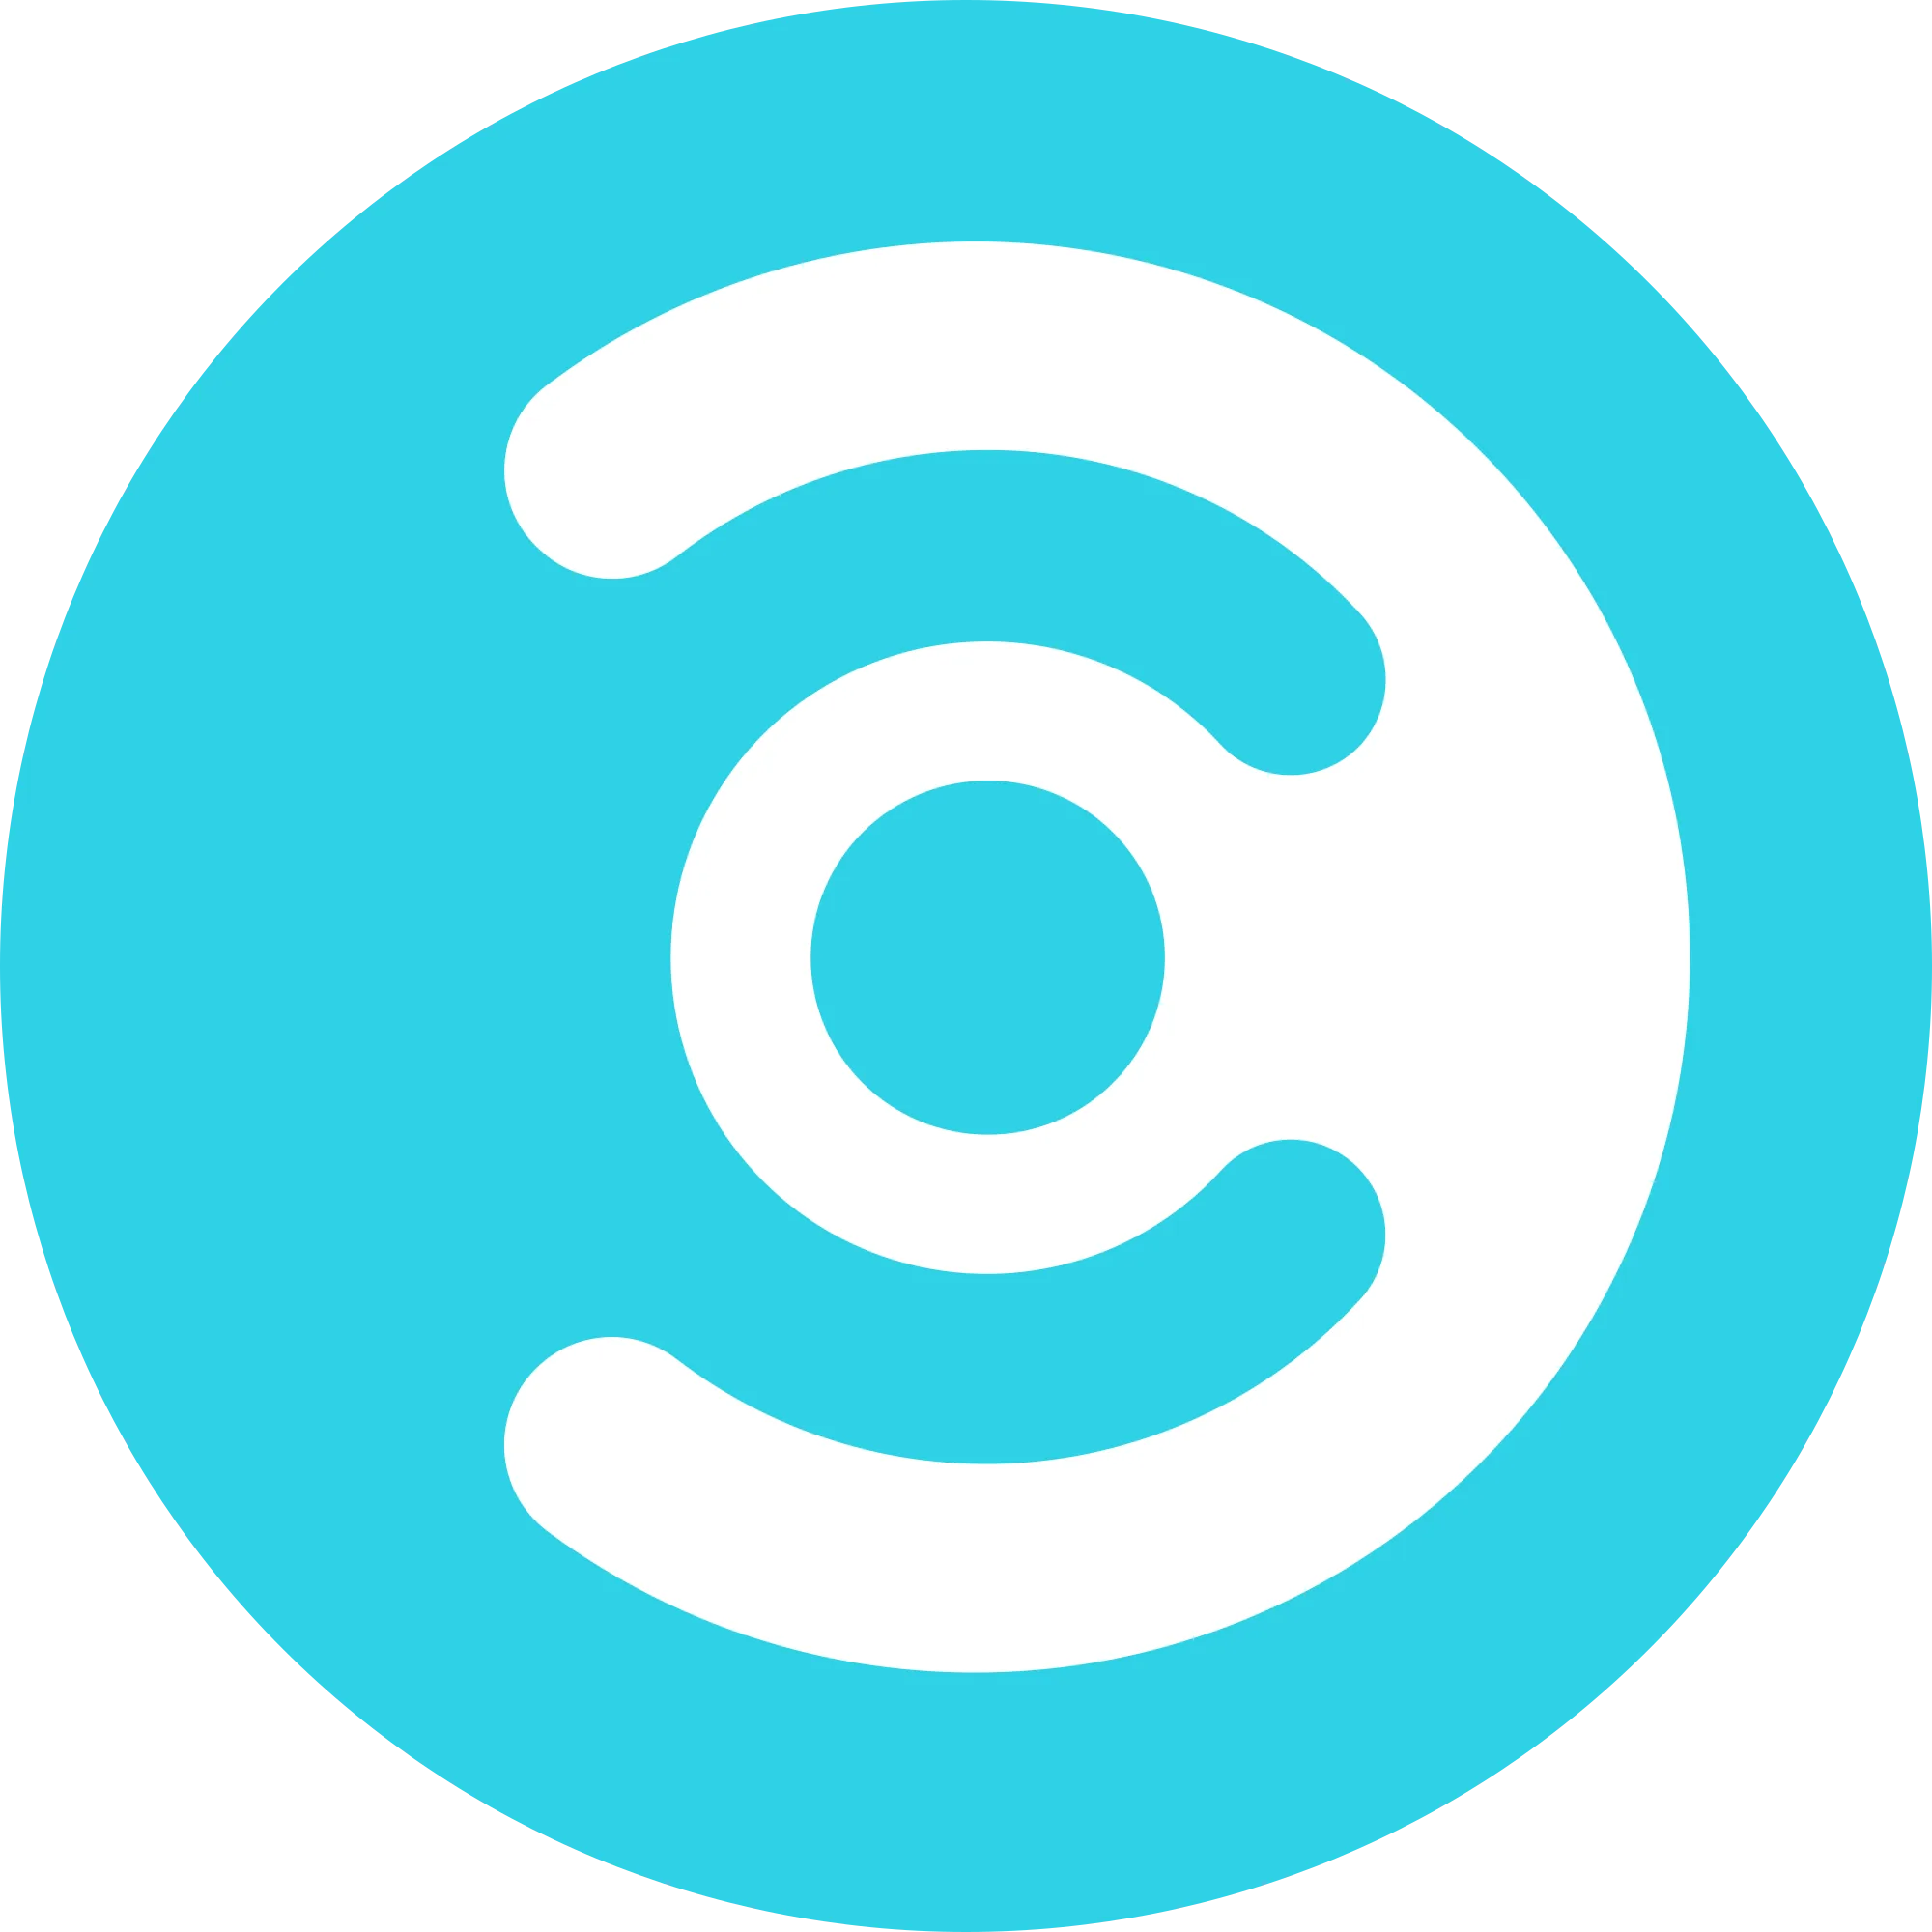 Commercium logo in png format